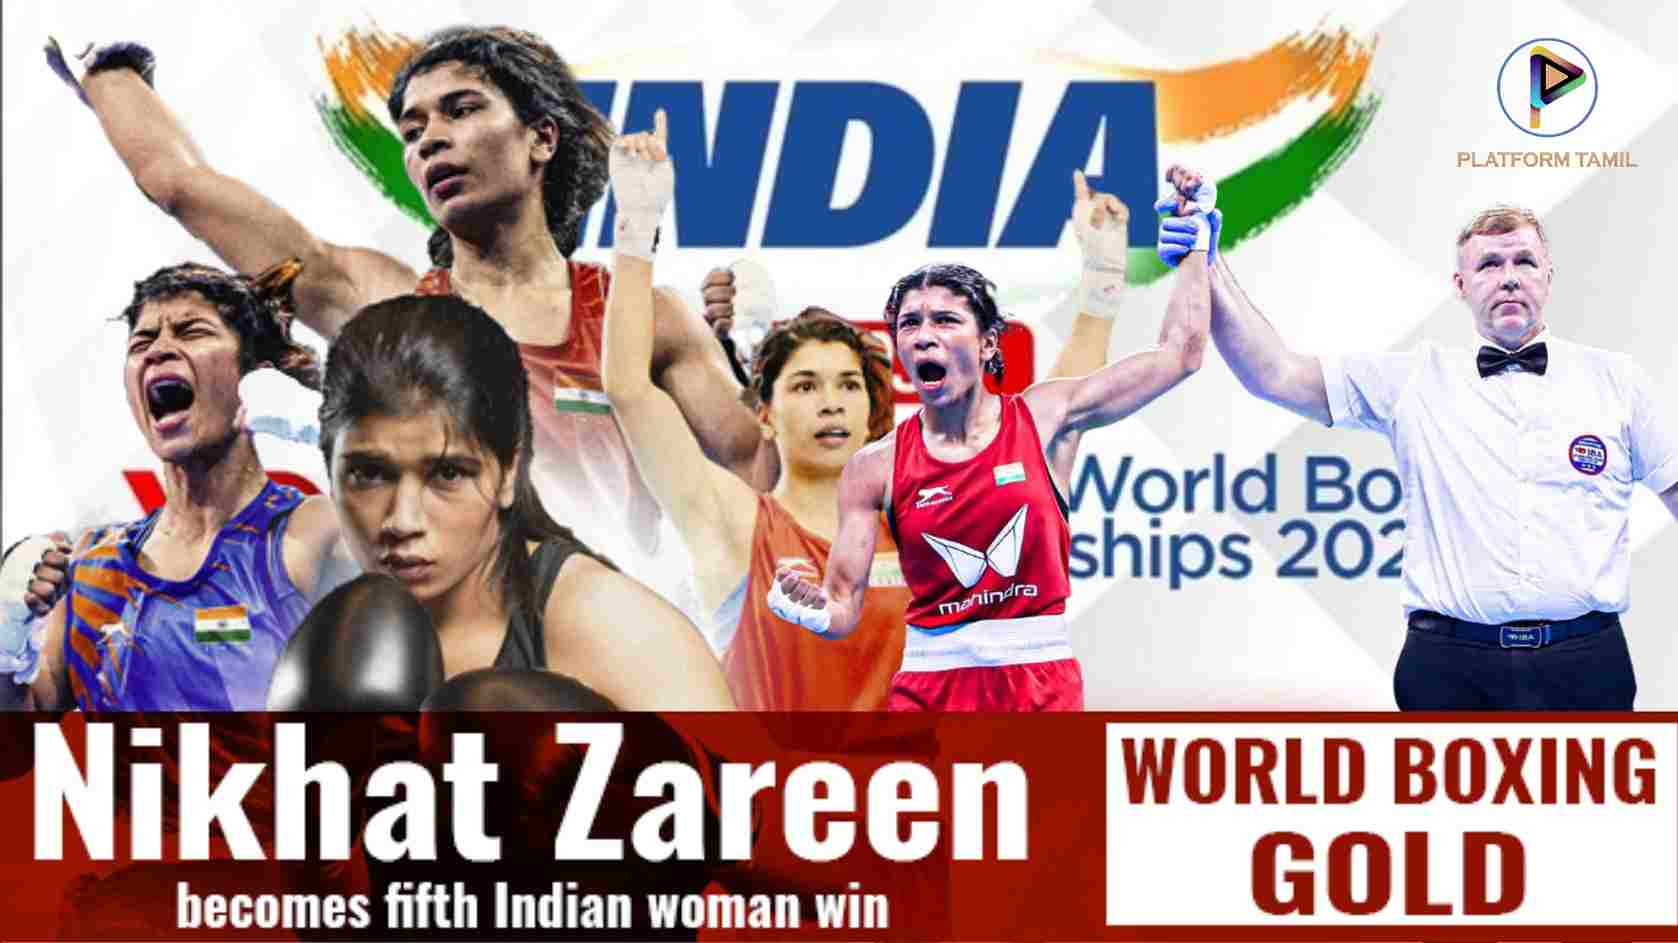 IBA Women's World Boxing Championship - Platform Tamil